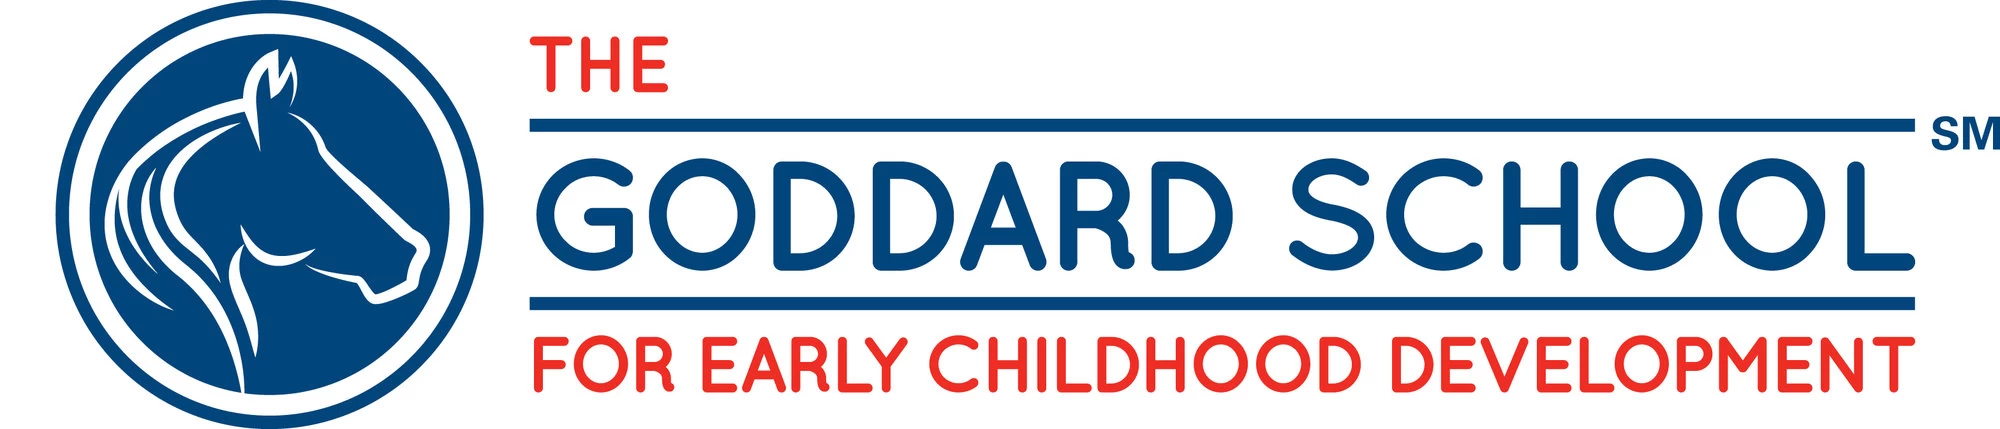 The Goddard School Franchise Information